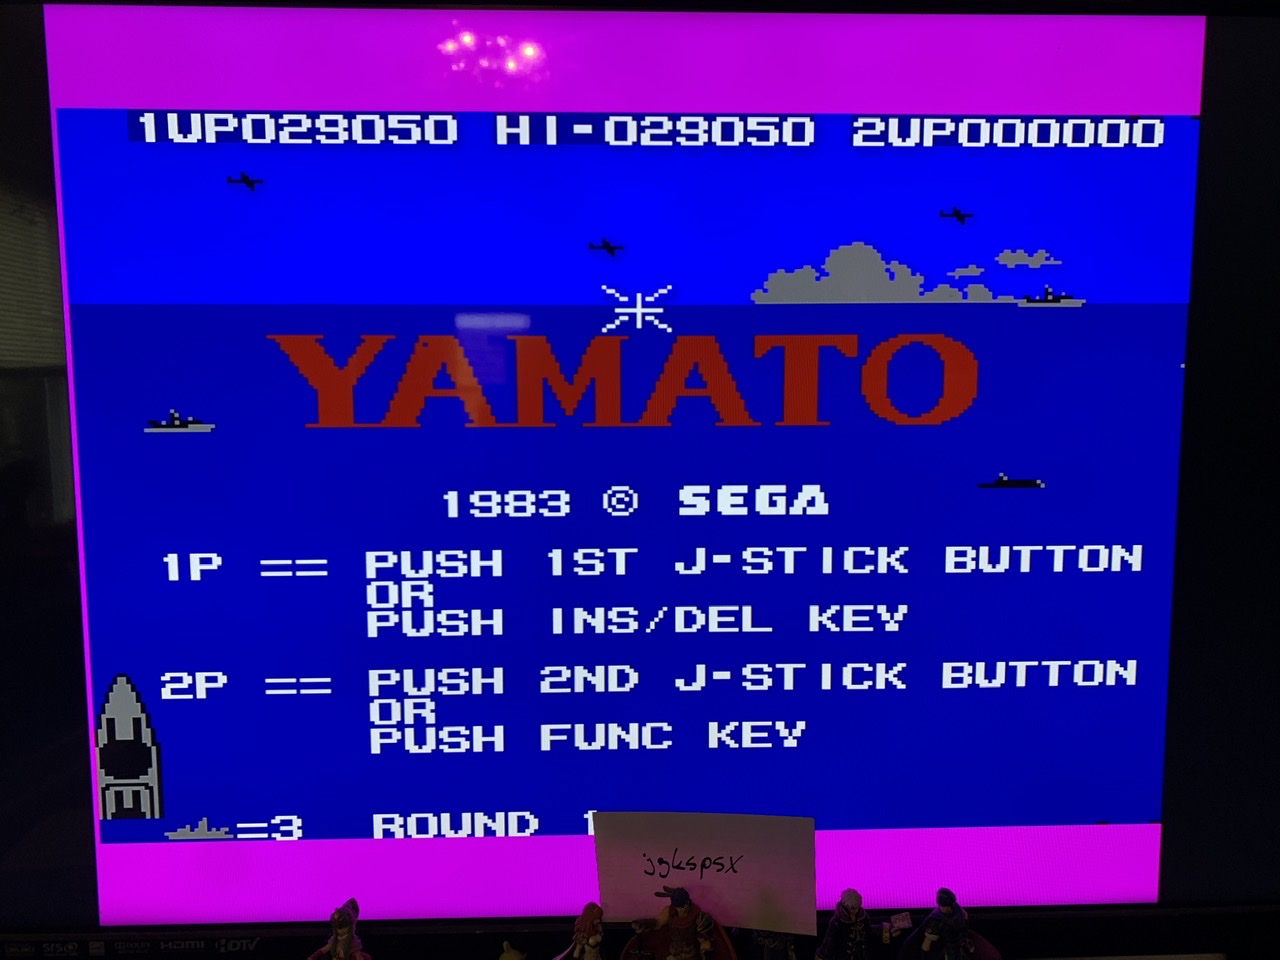 Yamato 29,050 points